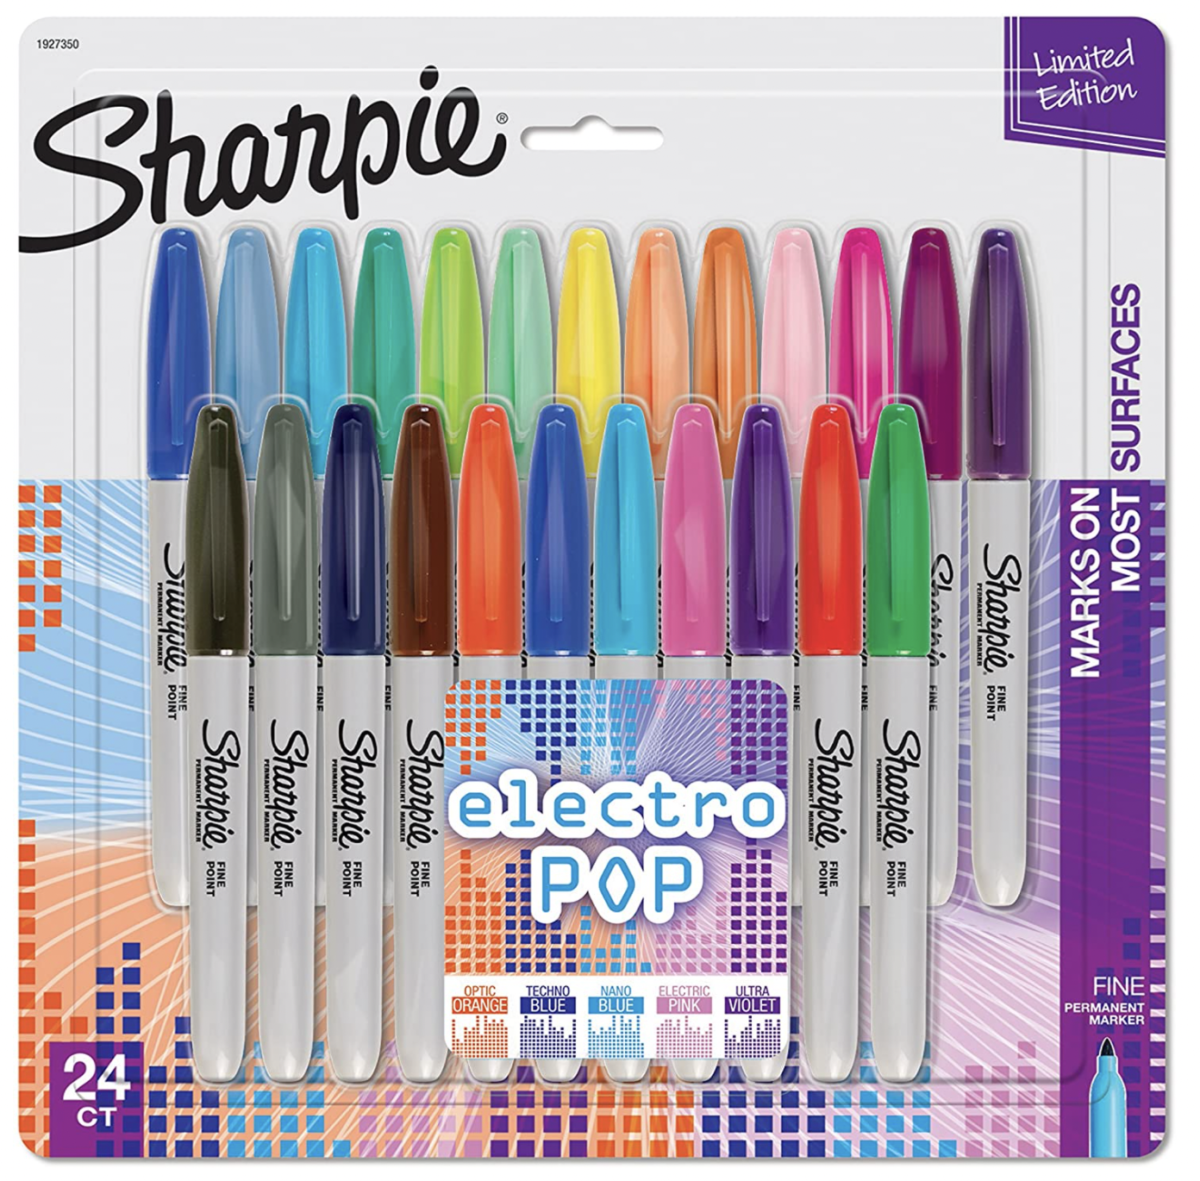 Electro Pop Sharpie Set